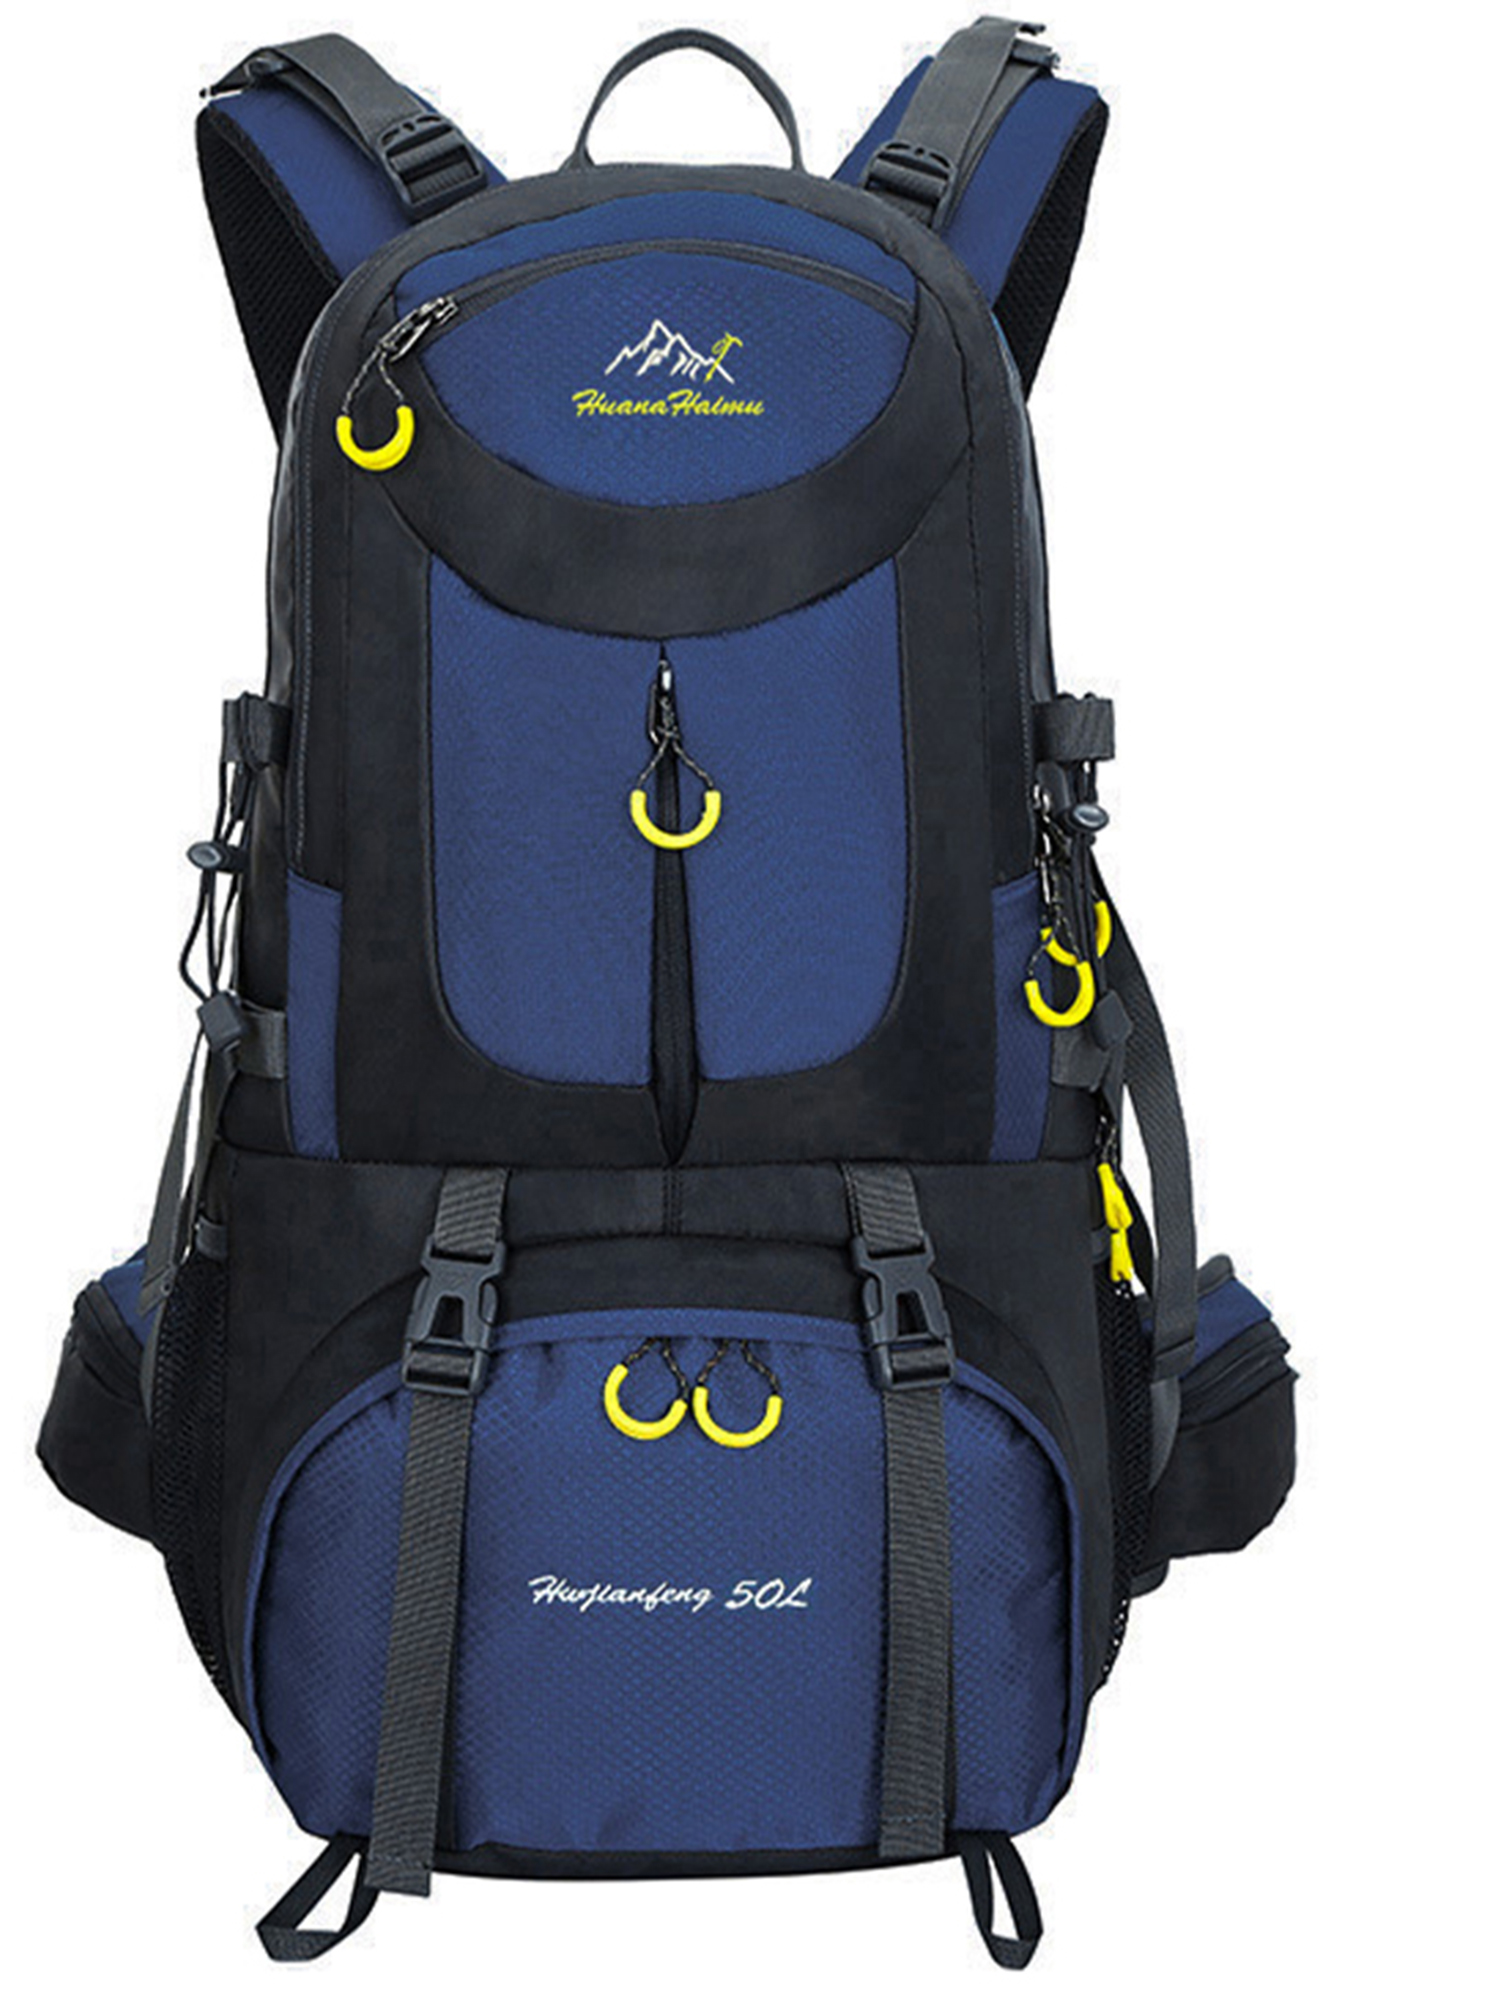 Glonme Men Travel Backpack Large Capacity Hiking Backpacks Multi Pockets Waterproof Rucksack Multipurpose Boys Lightweight Zipper Durable Anti Theft Deep Blue 50L - image 1 of 2